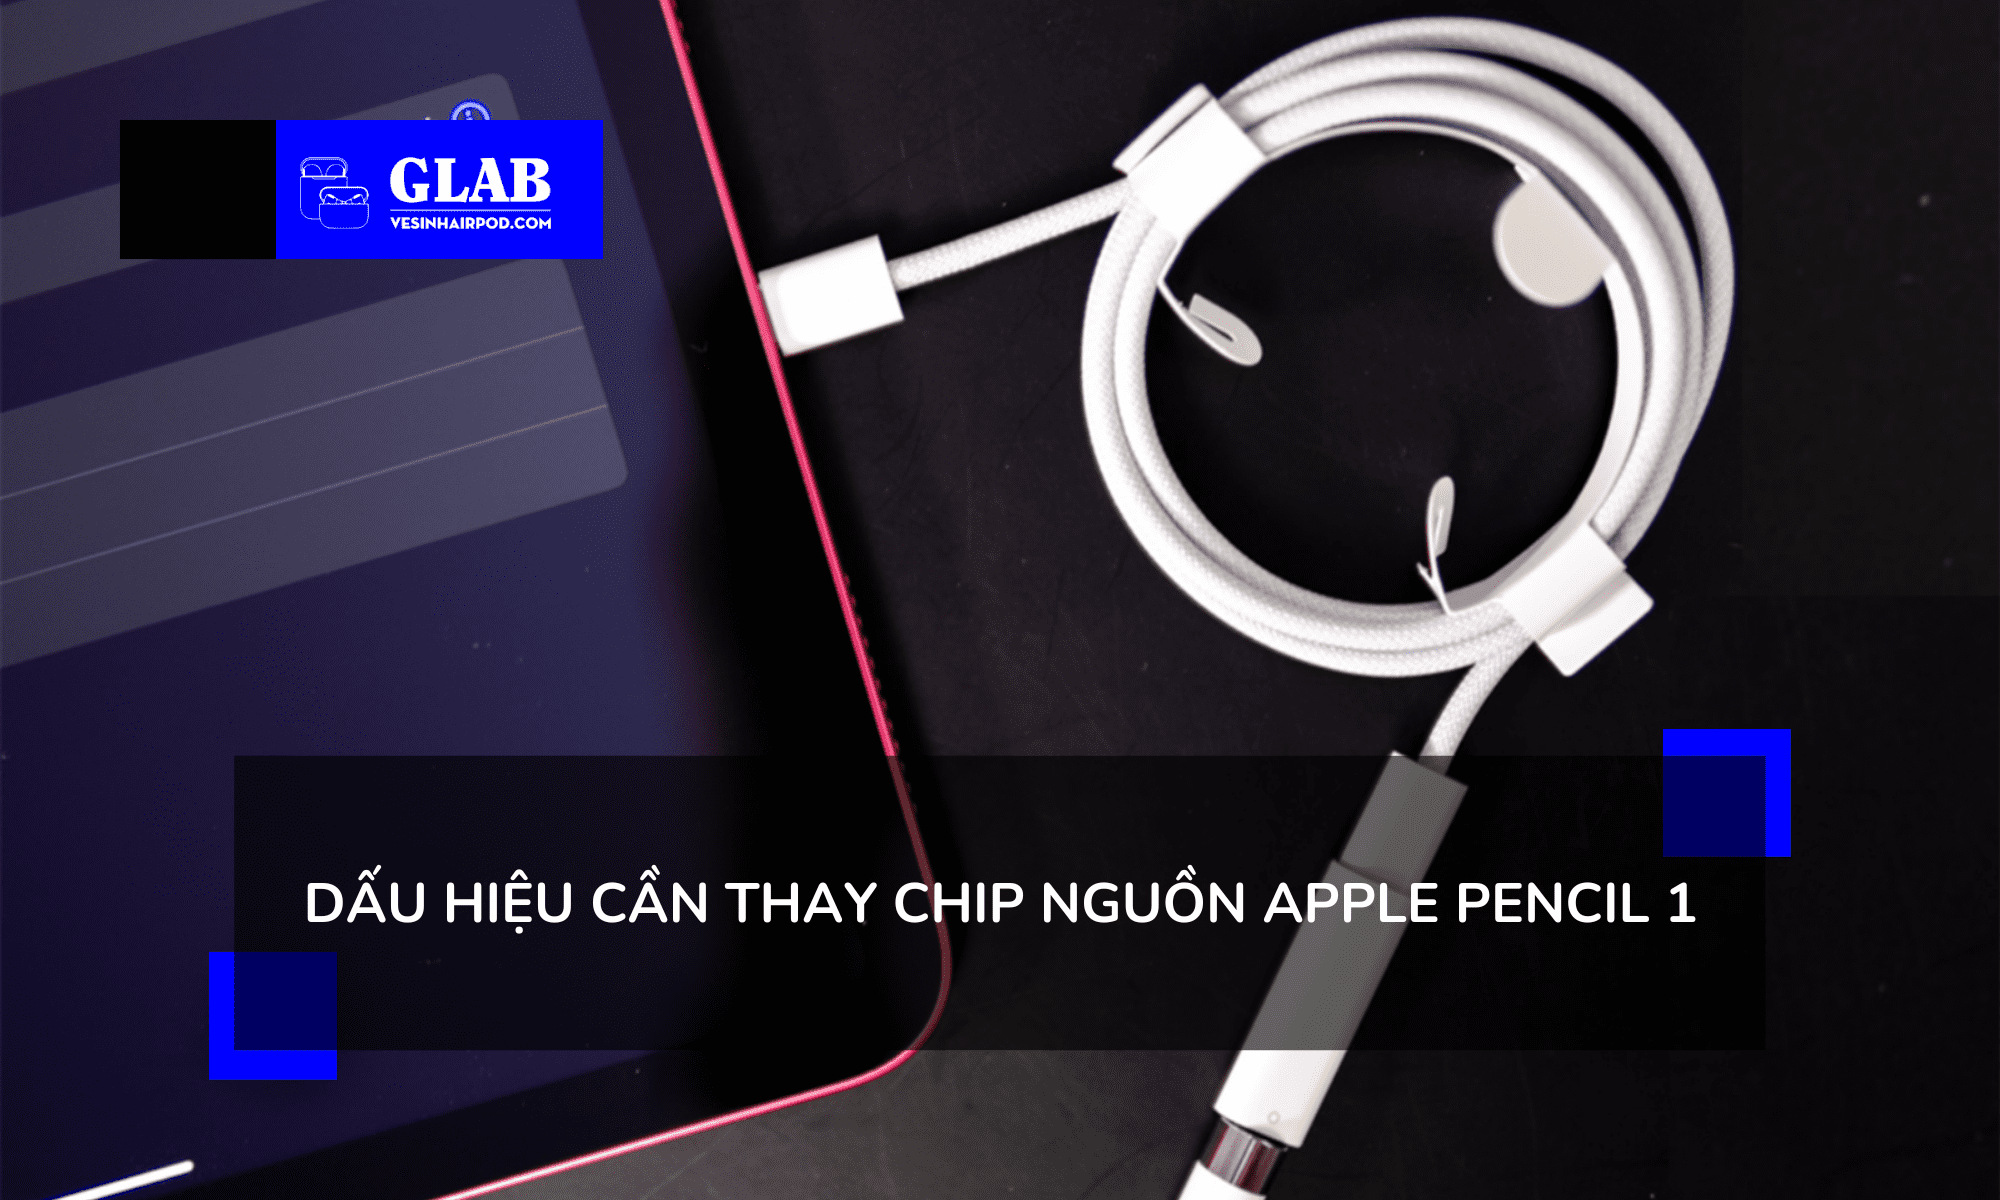 thay-chip-nguon-apple-pencil-1